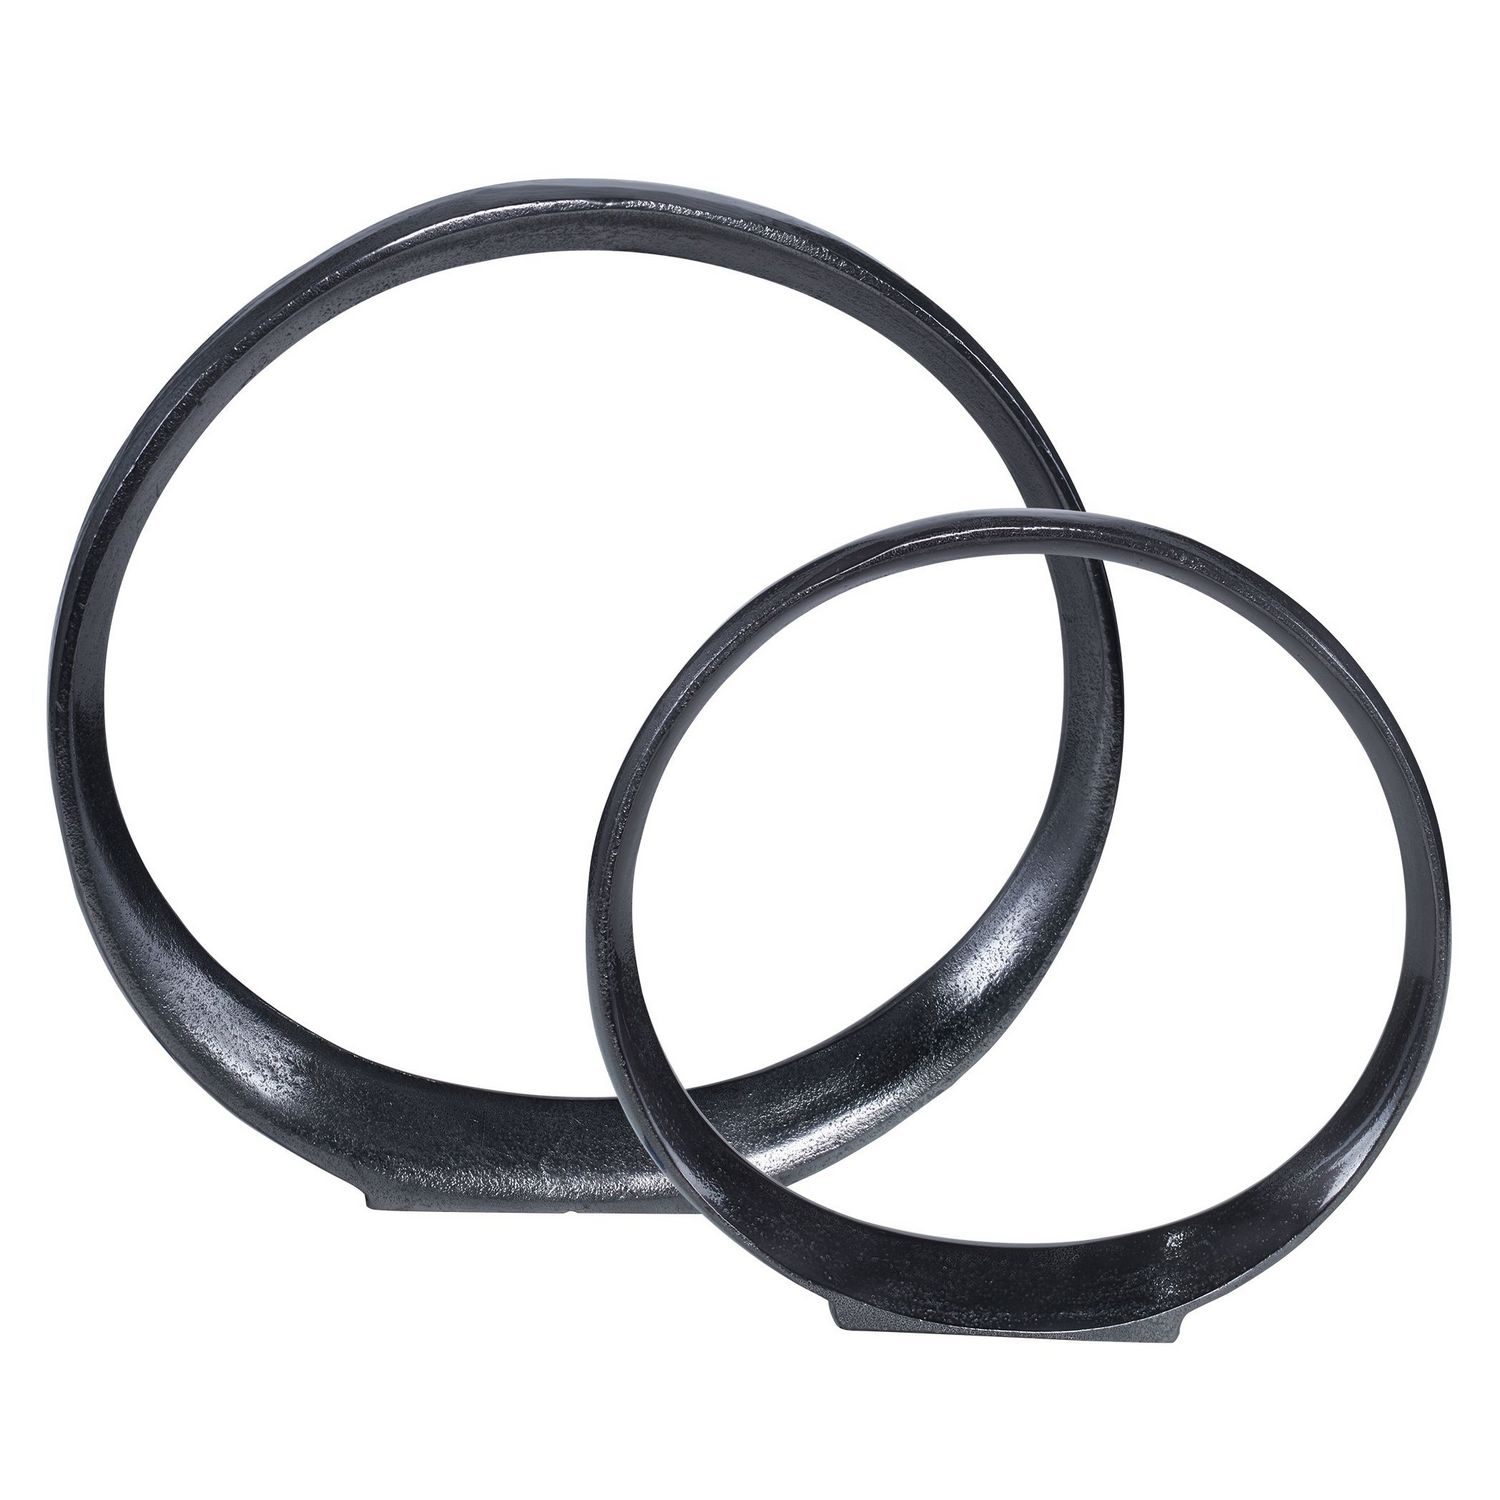 Uttermost Orbits Ring Sculptures - Set of 2 - Black